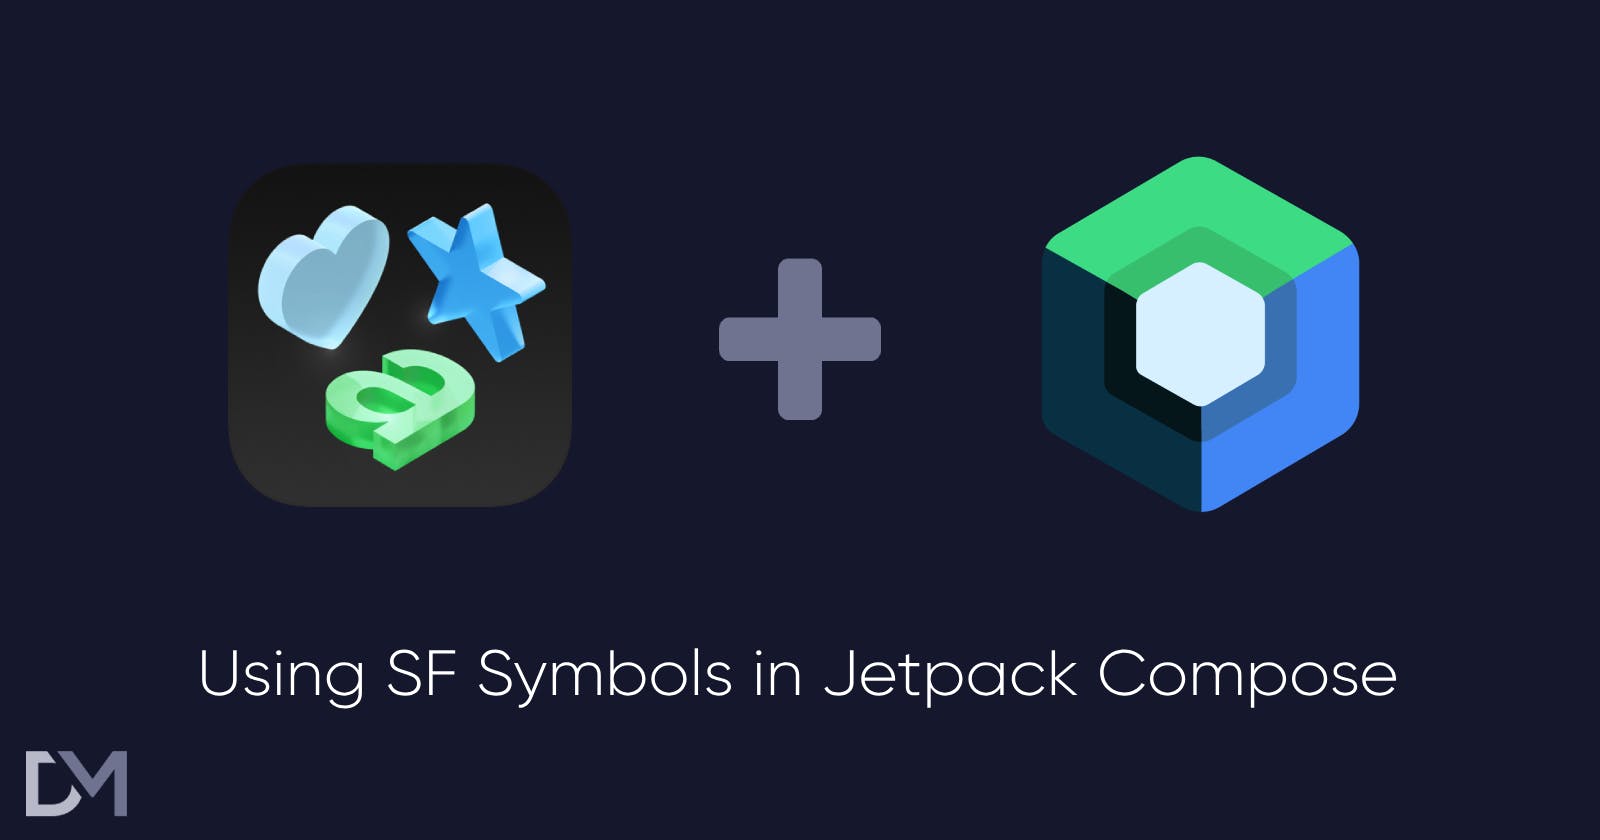 Using SFSymbols in Jetpack Compose